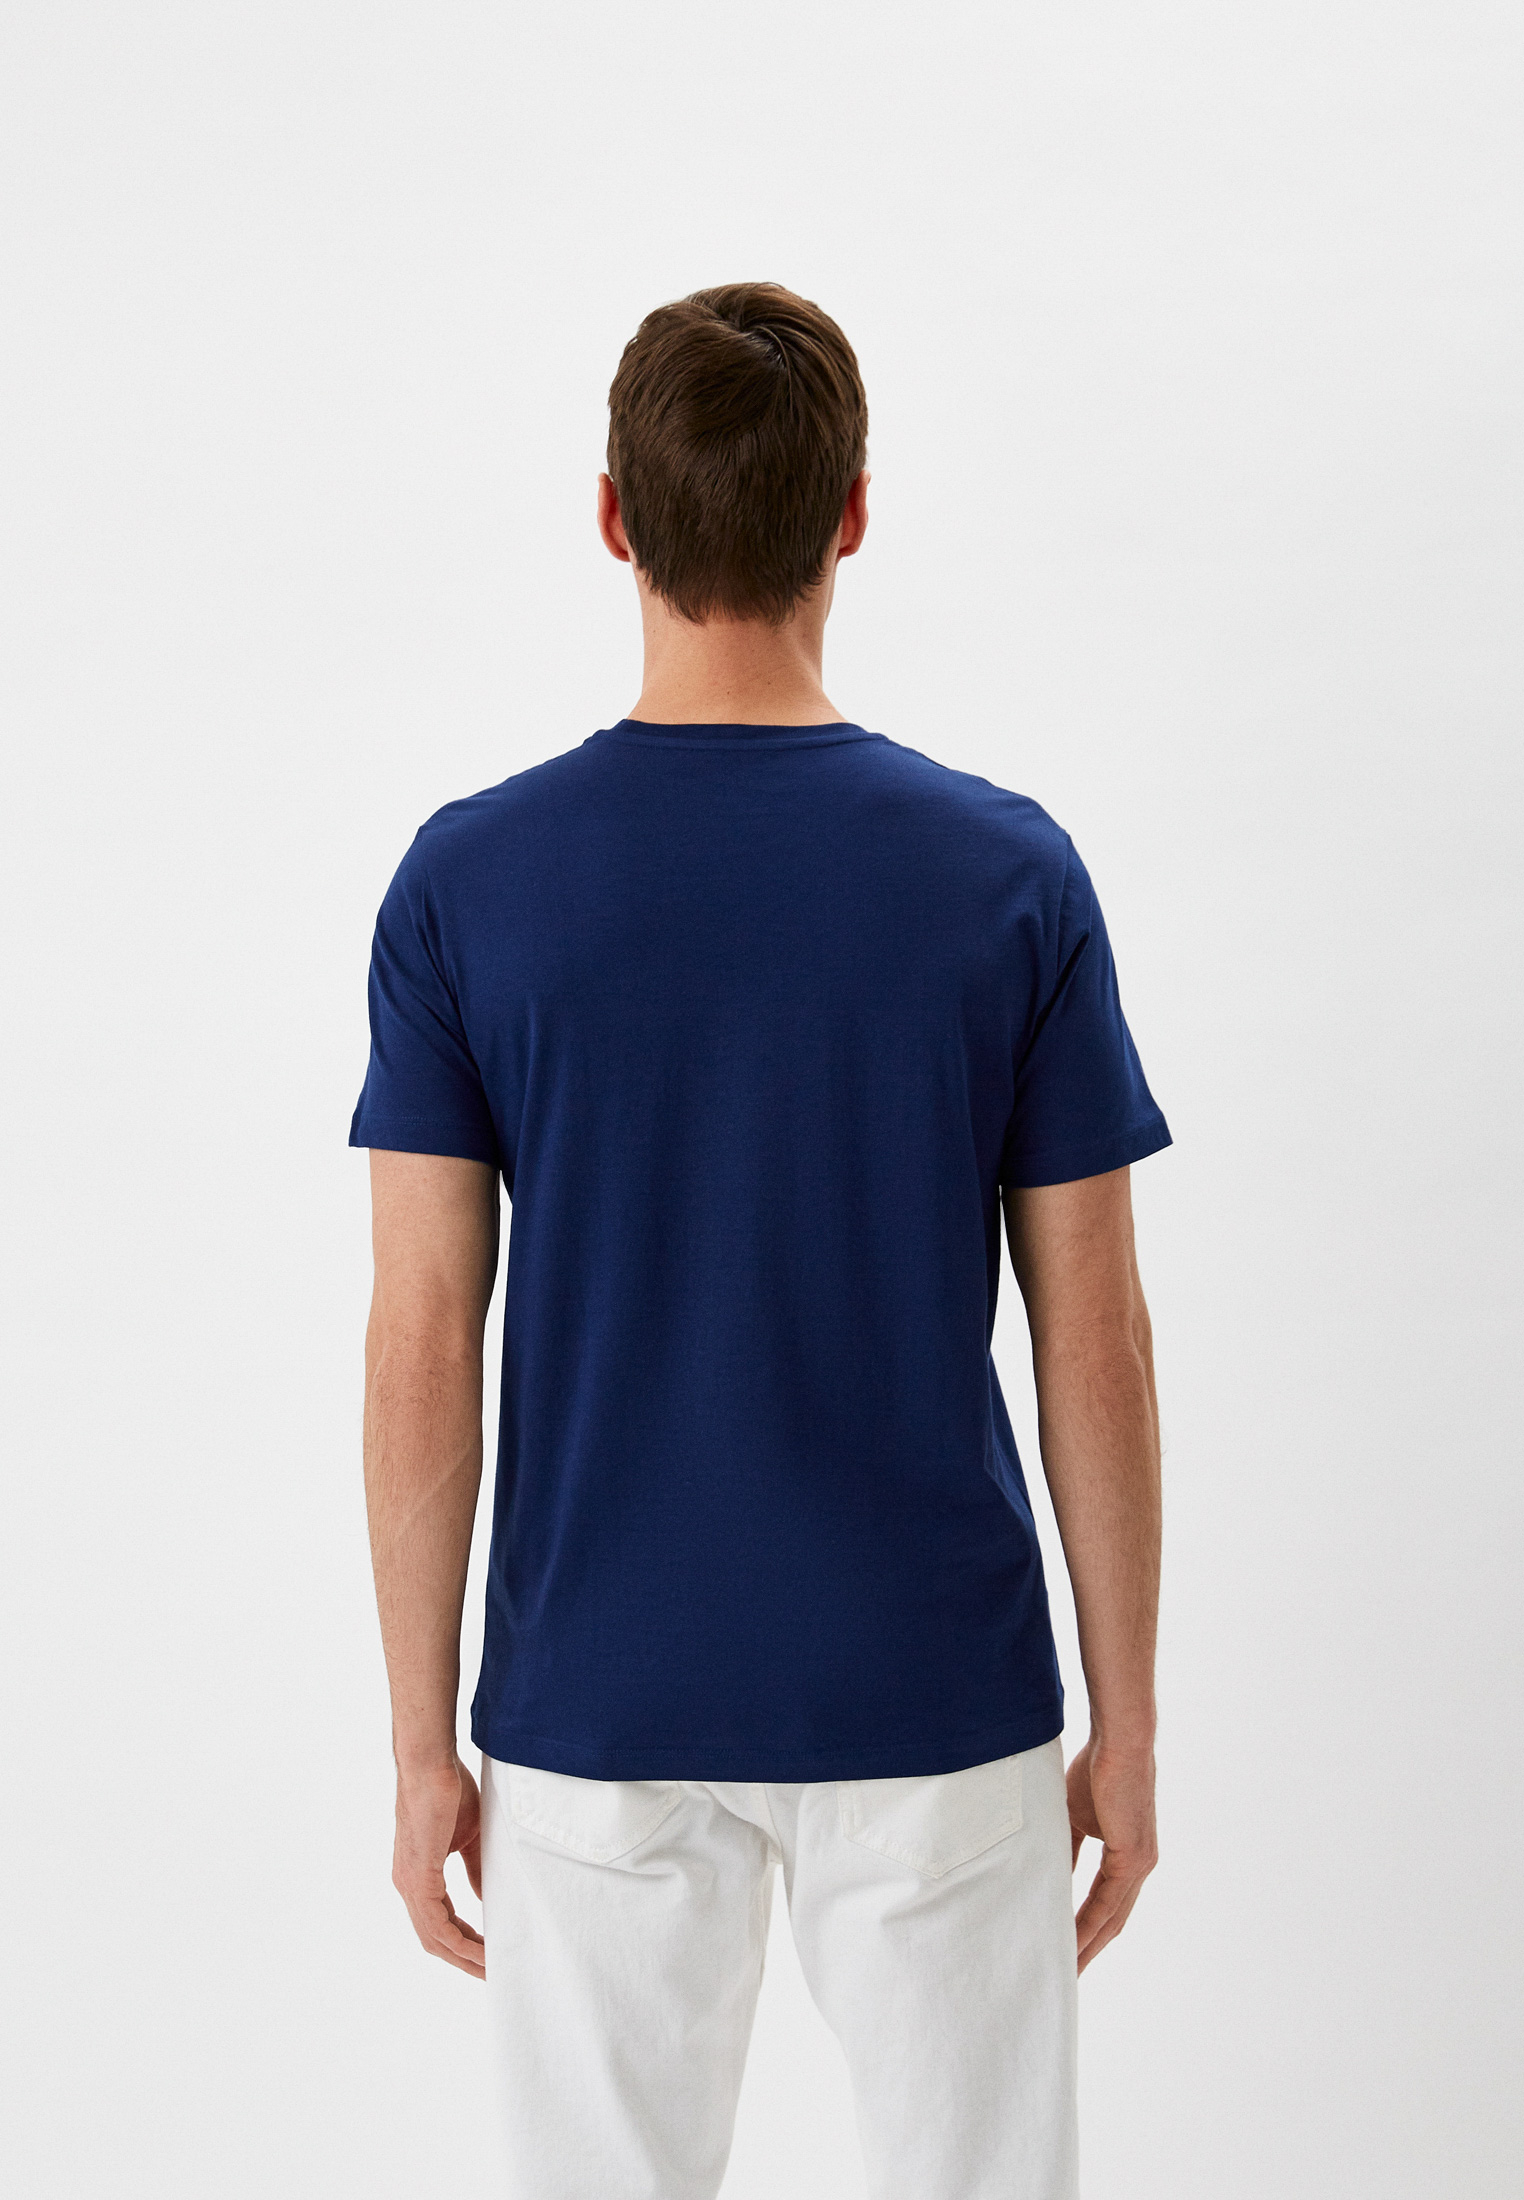 Мужская футболка Trussardi (Труссарди) 52T00594-1T005381: изображение 3